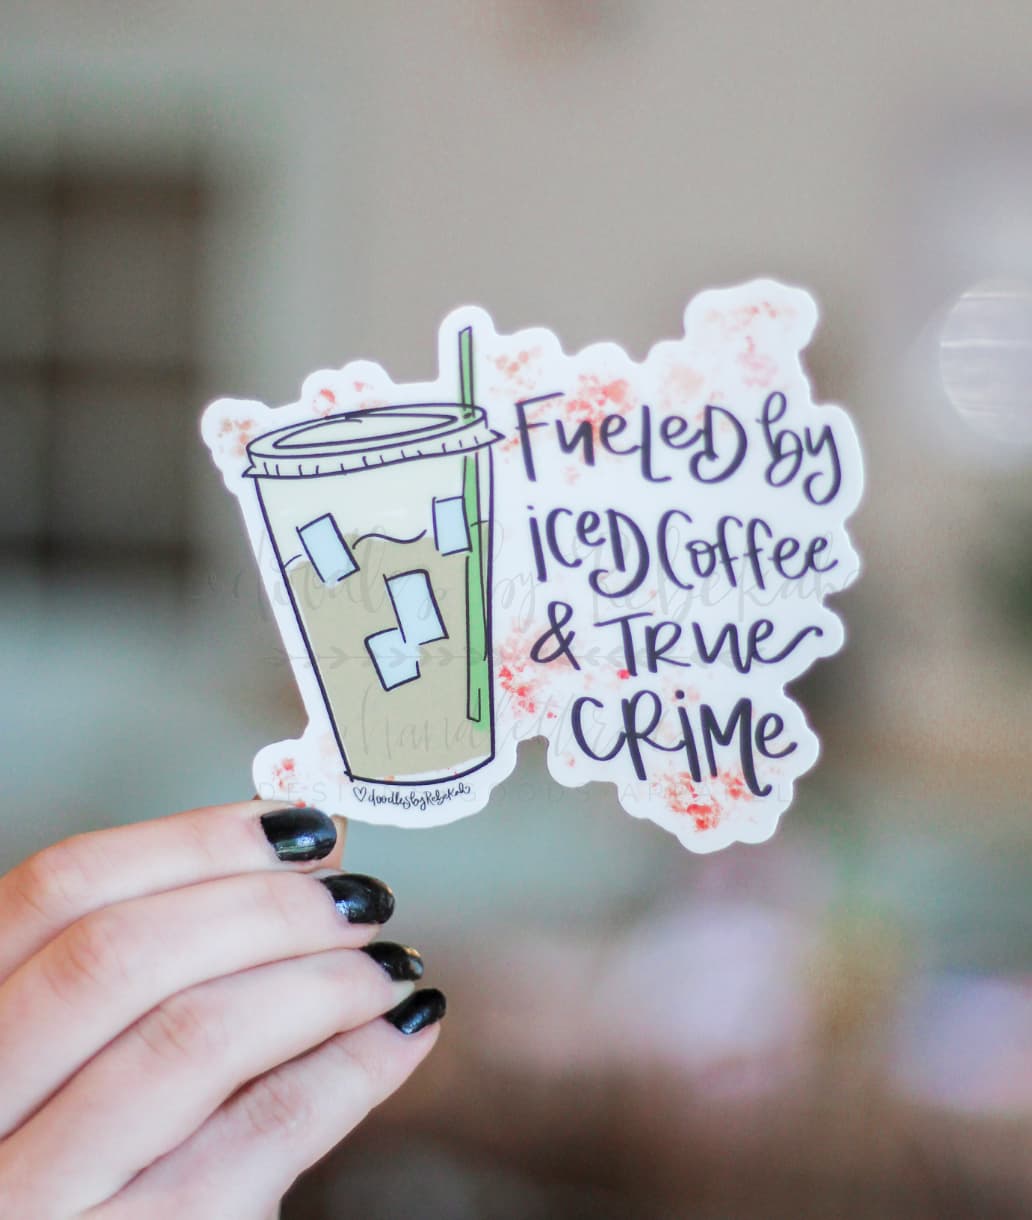 Doodles by Rebekah - Iced Coffee Passenger Princess Sticker